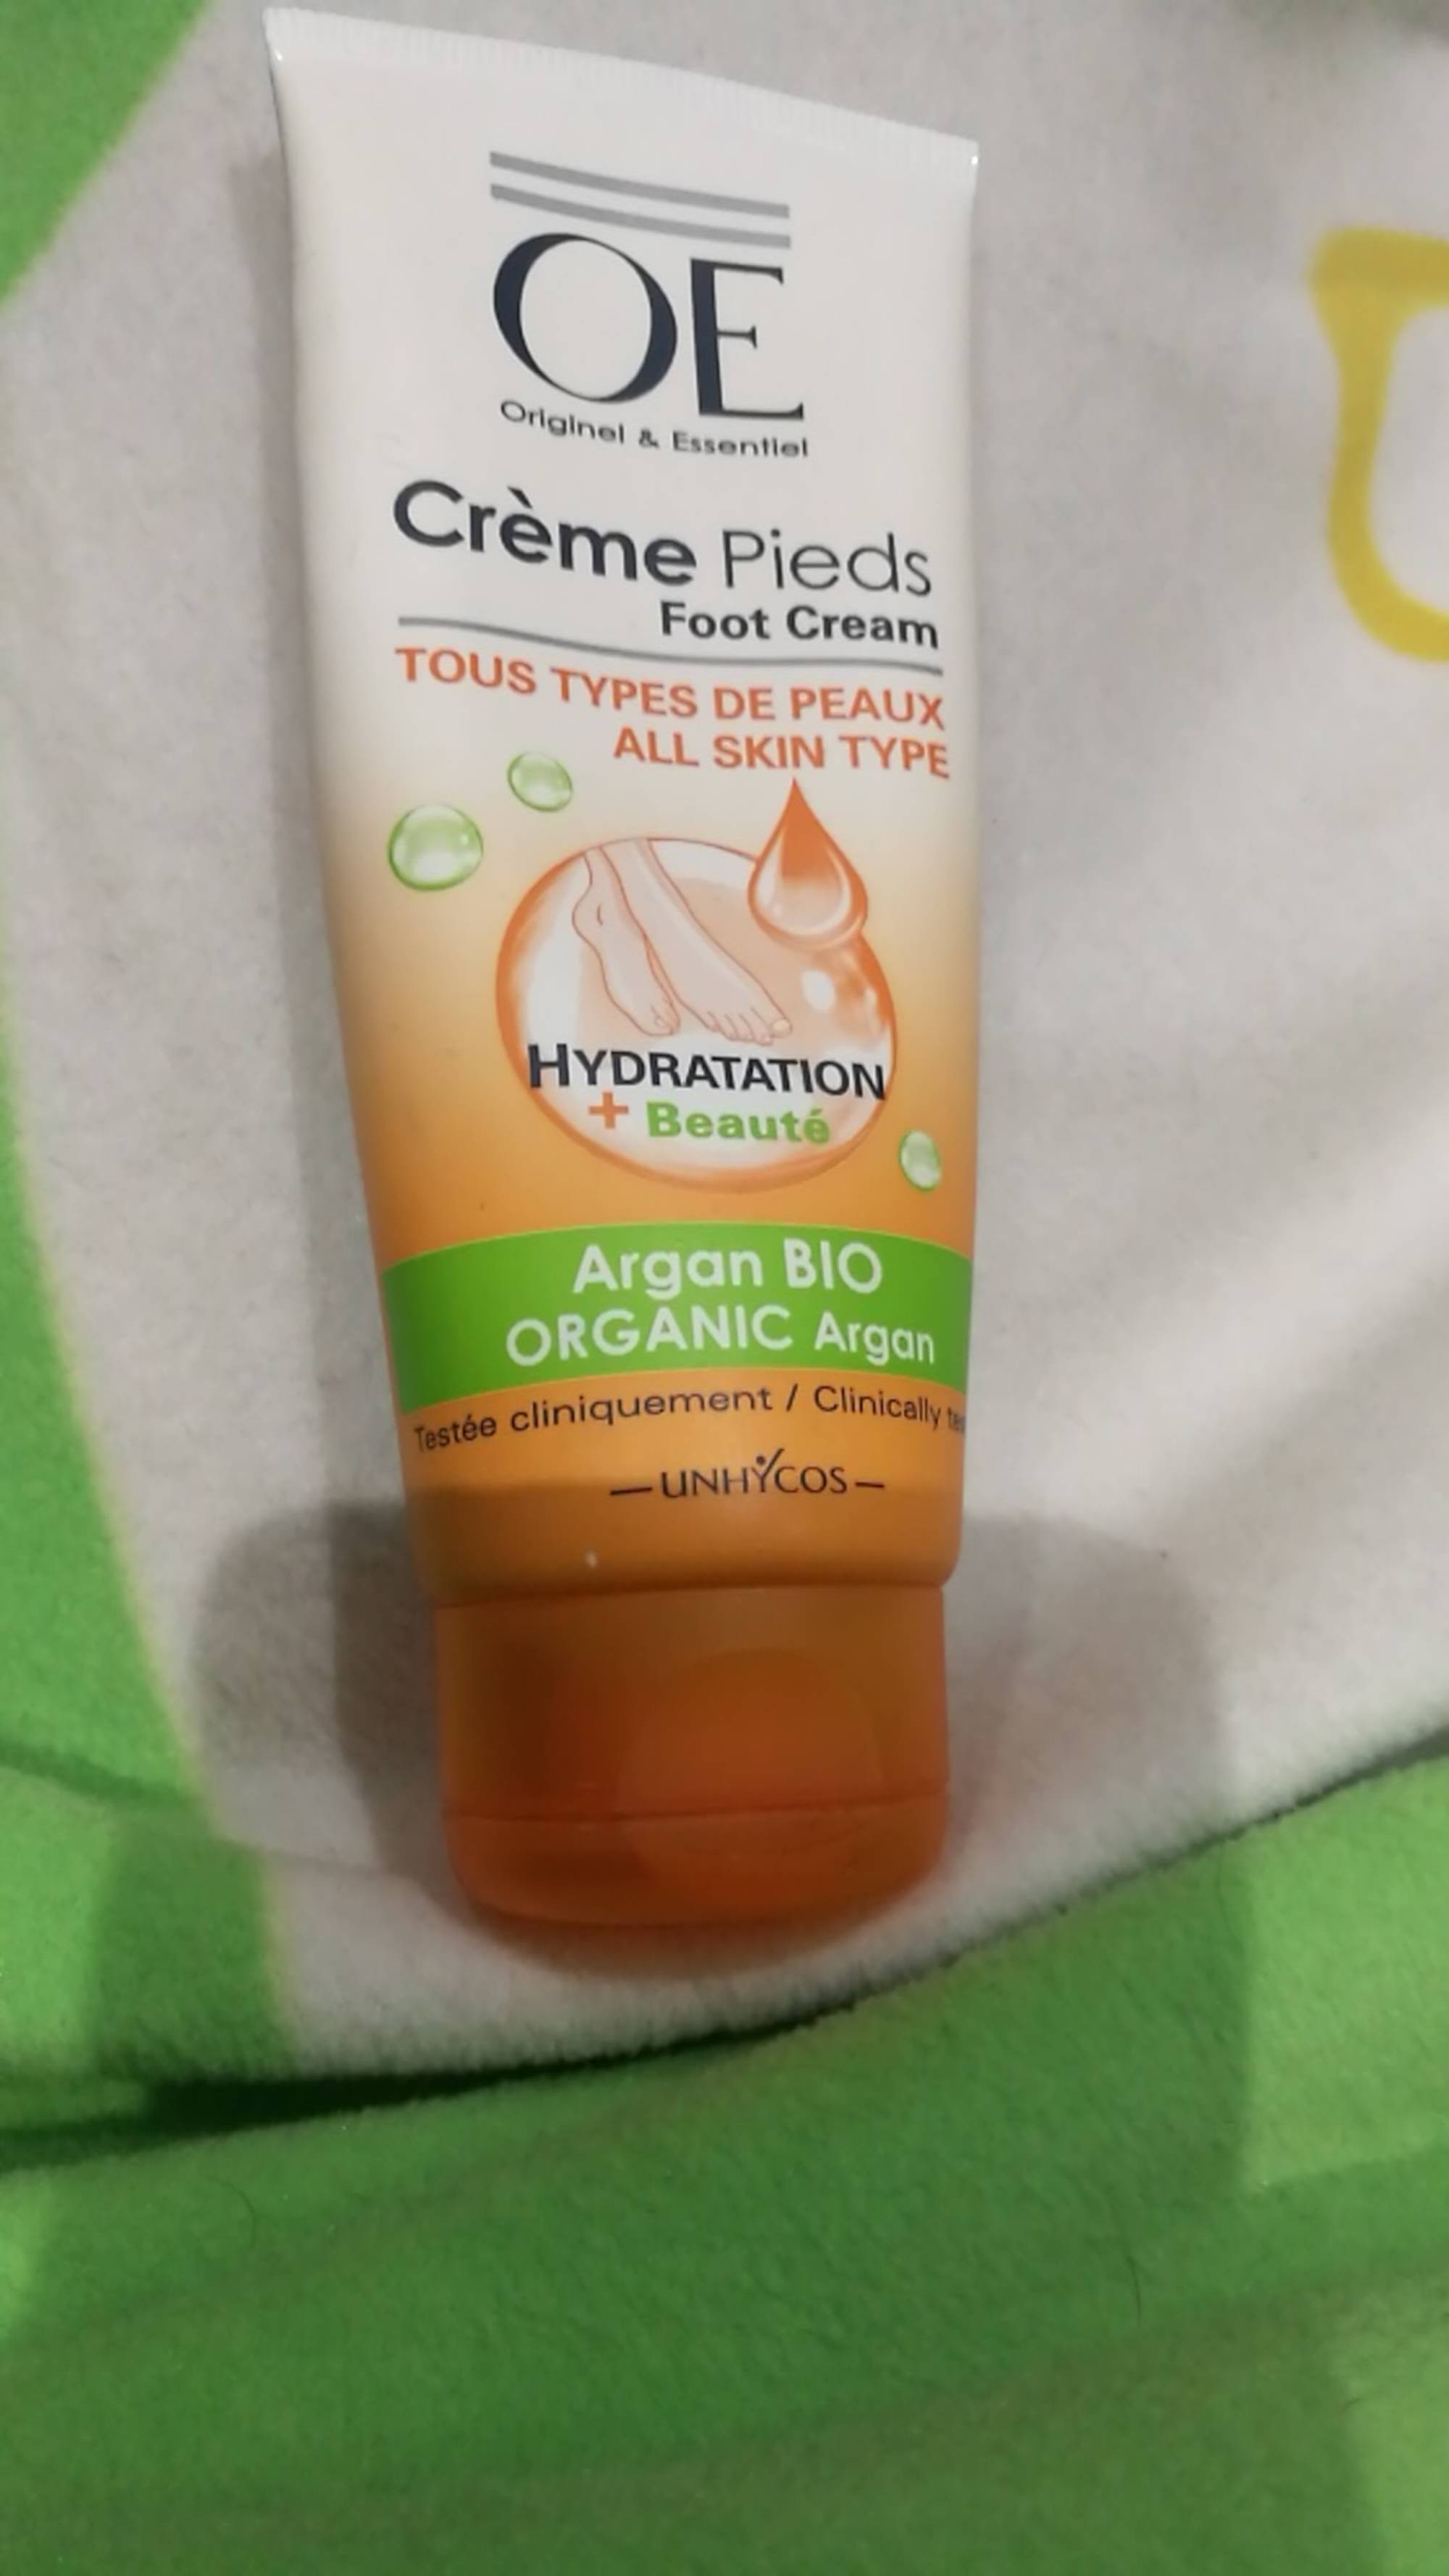 OE ORIGINEL & ESSENTIEL - Hydratation beauté - Crème pieds argan bio